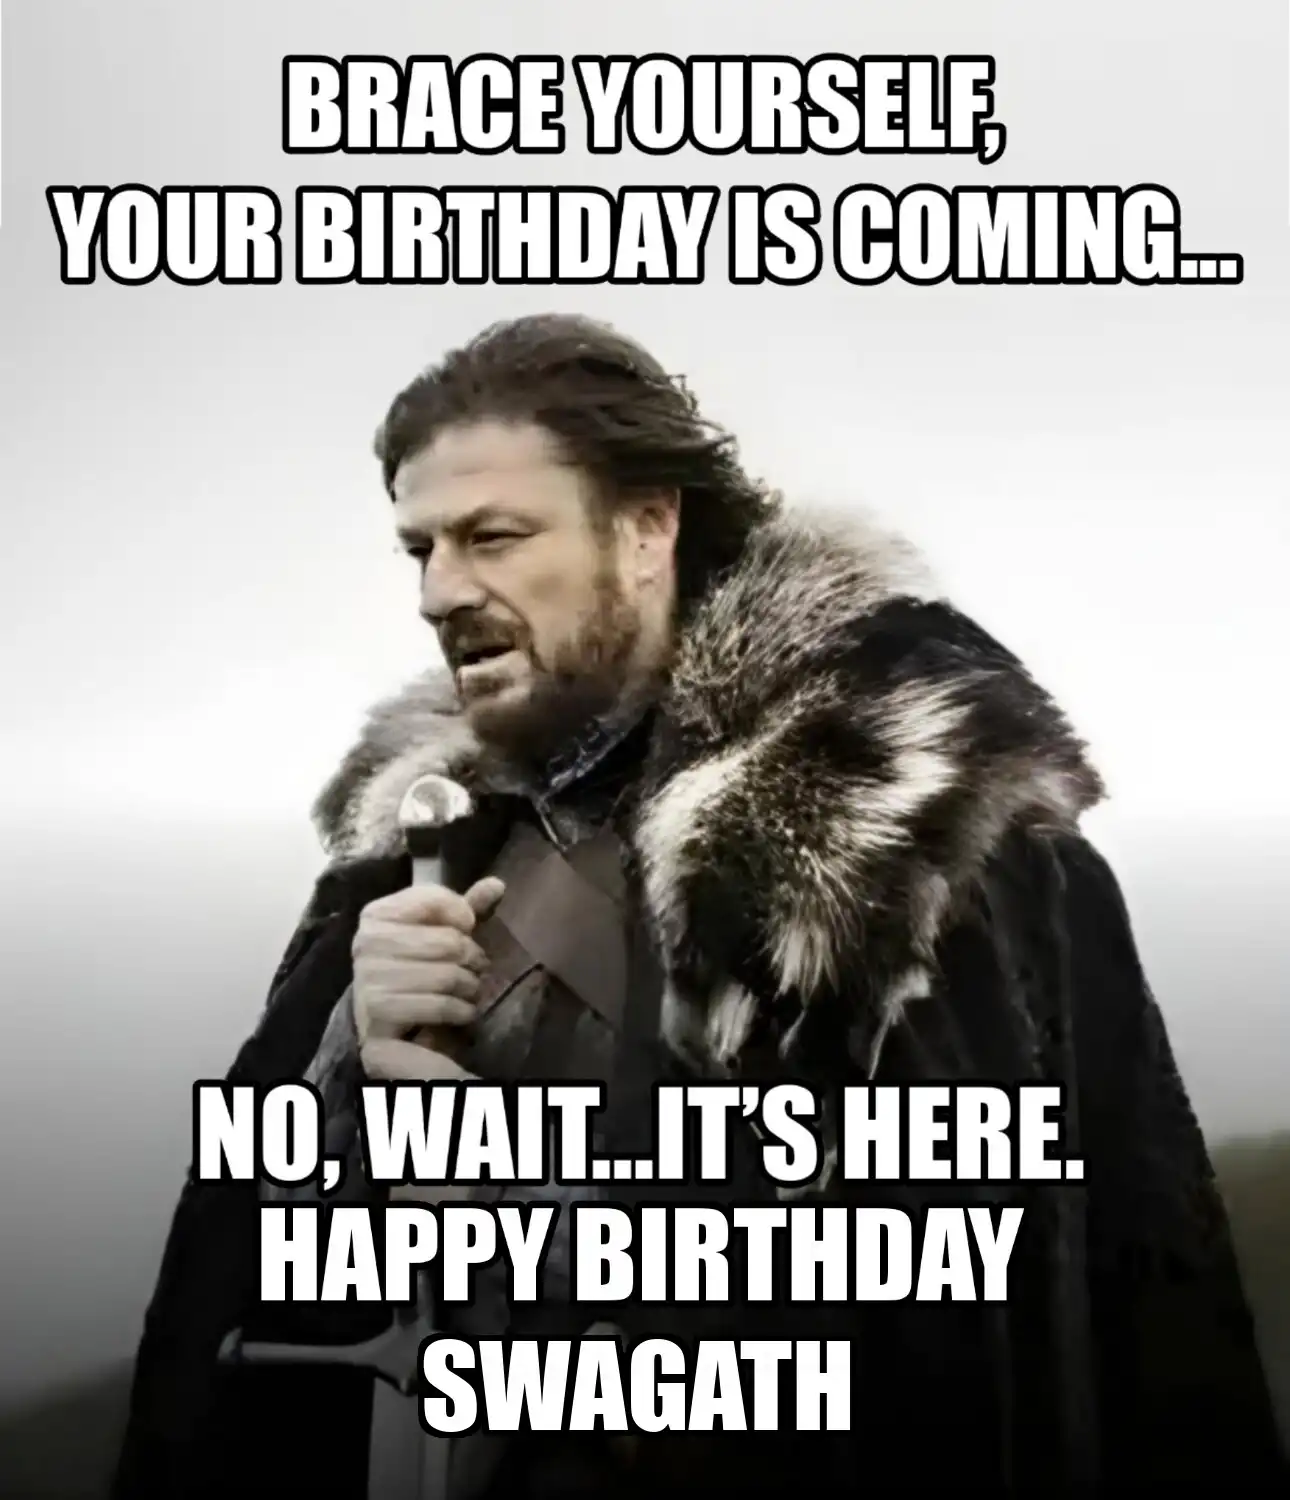 Happy Birthday Swagath Brace Yourself Your Birthday Is Coming Meme